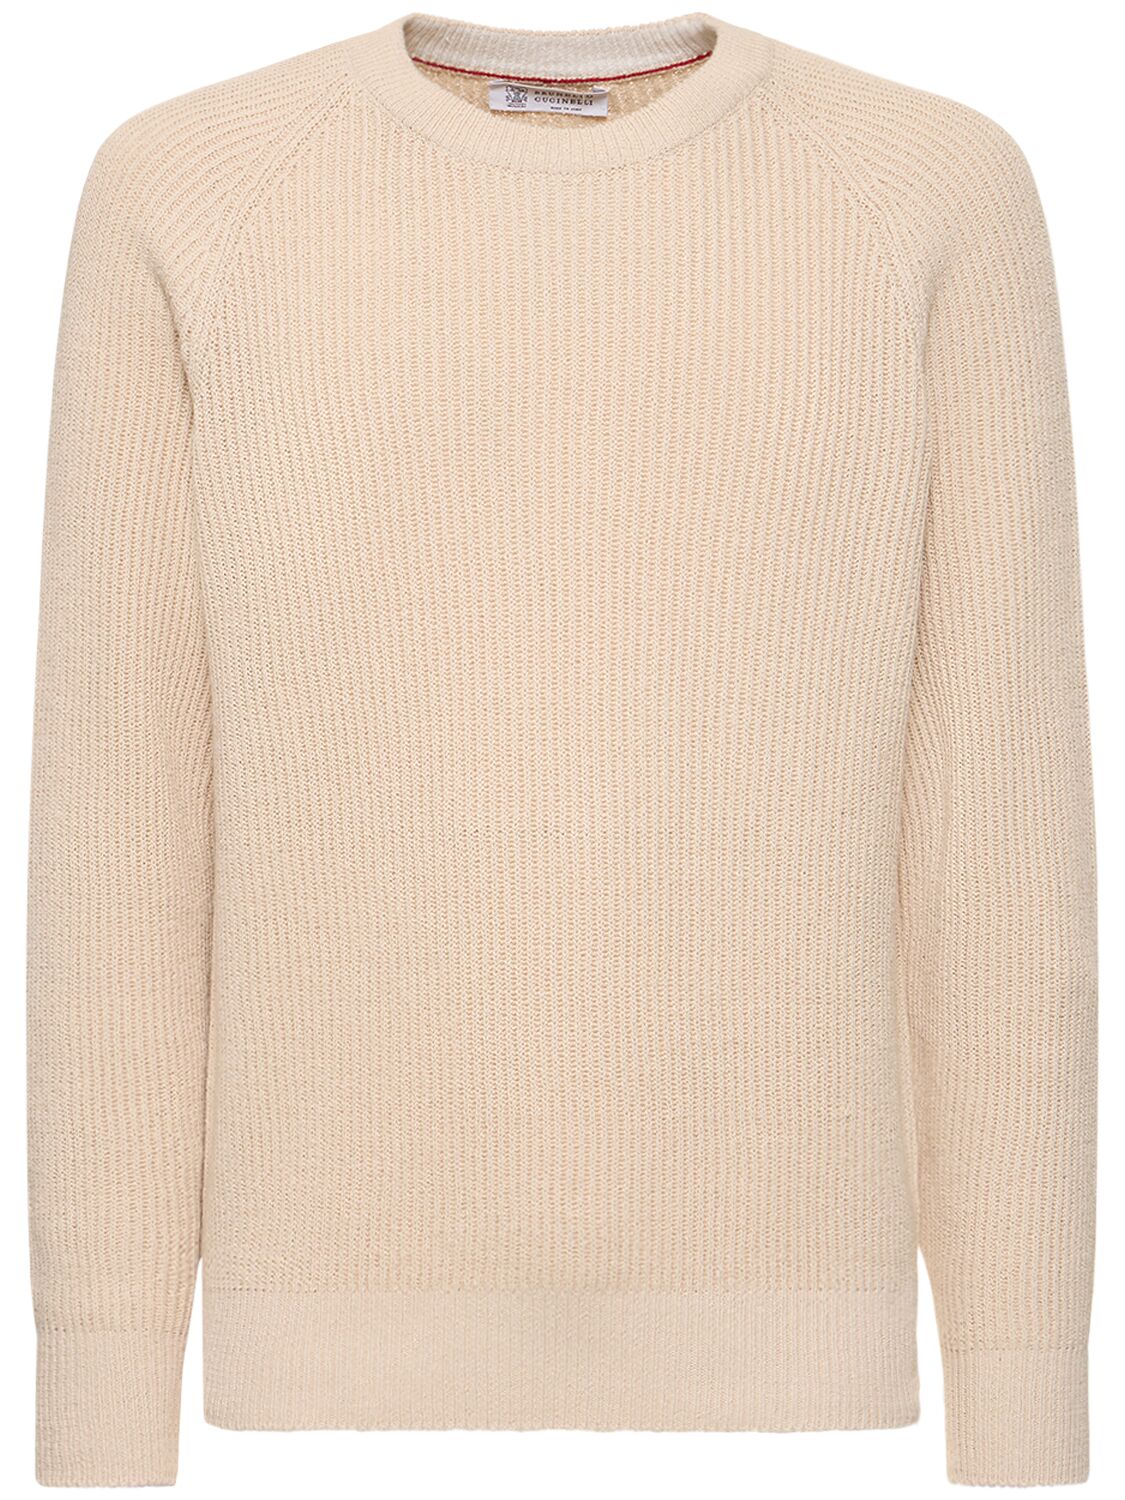 Image of Cotton Knit Crewneck Sweater